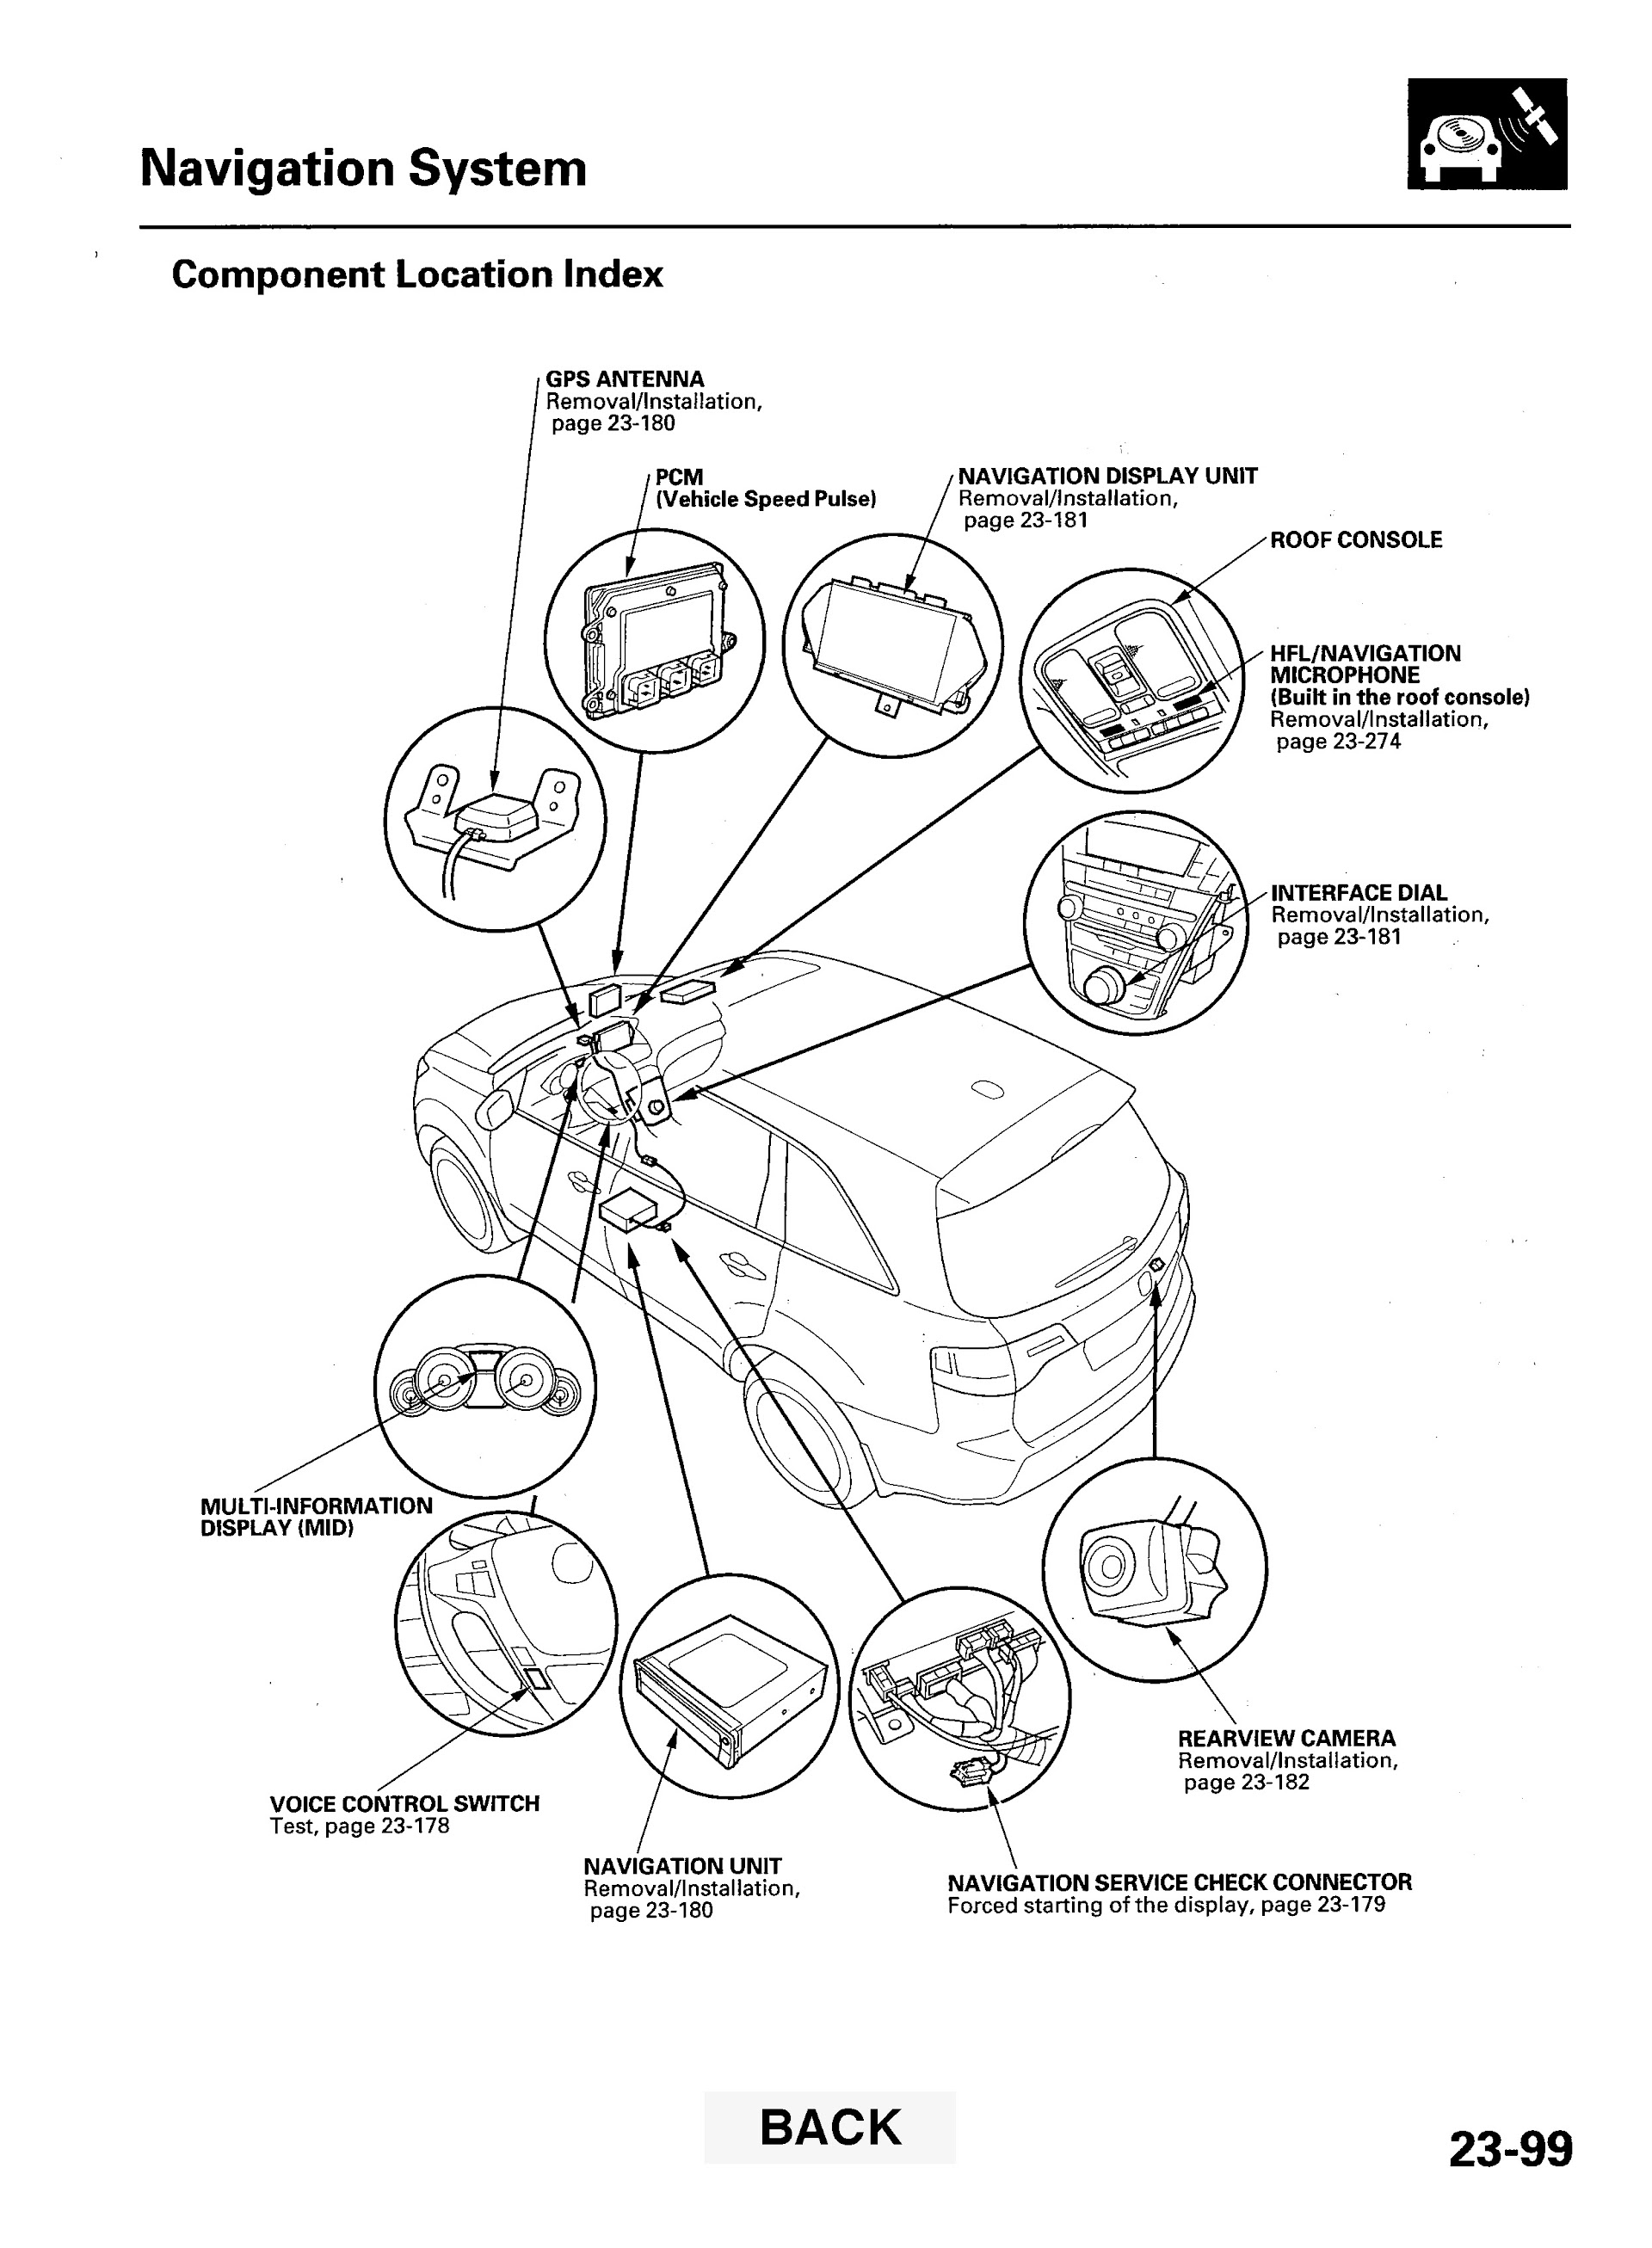 2009 Acura MDX Repair Manual, Navigation System